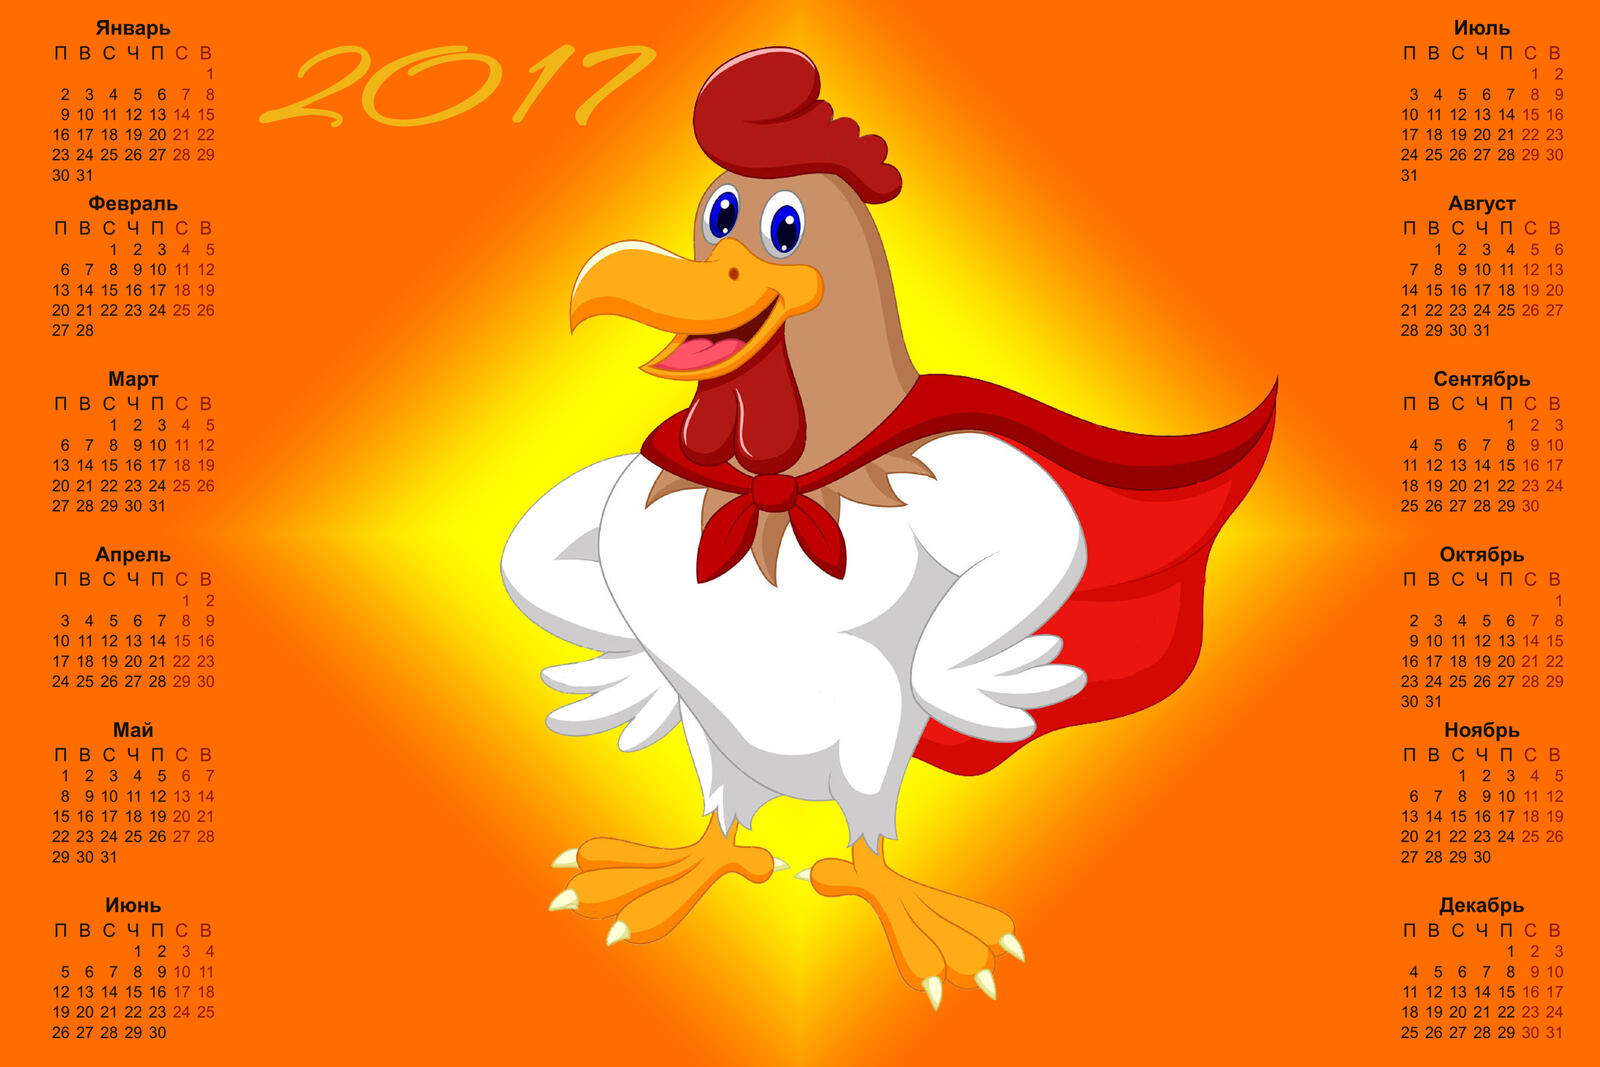 Wallpapers Wall Calendar for 2017 Fire Cock Fire Cock Calendar for 2017 on the desktop